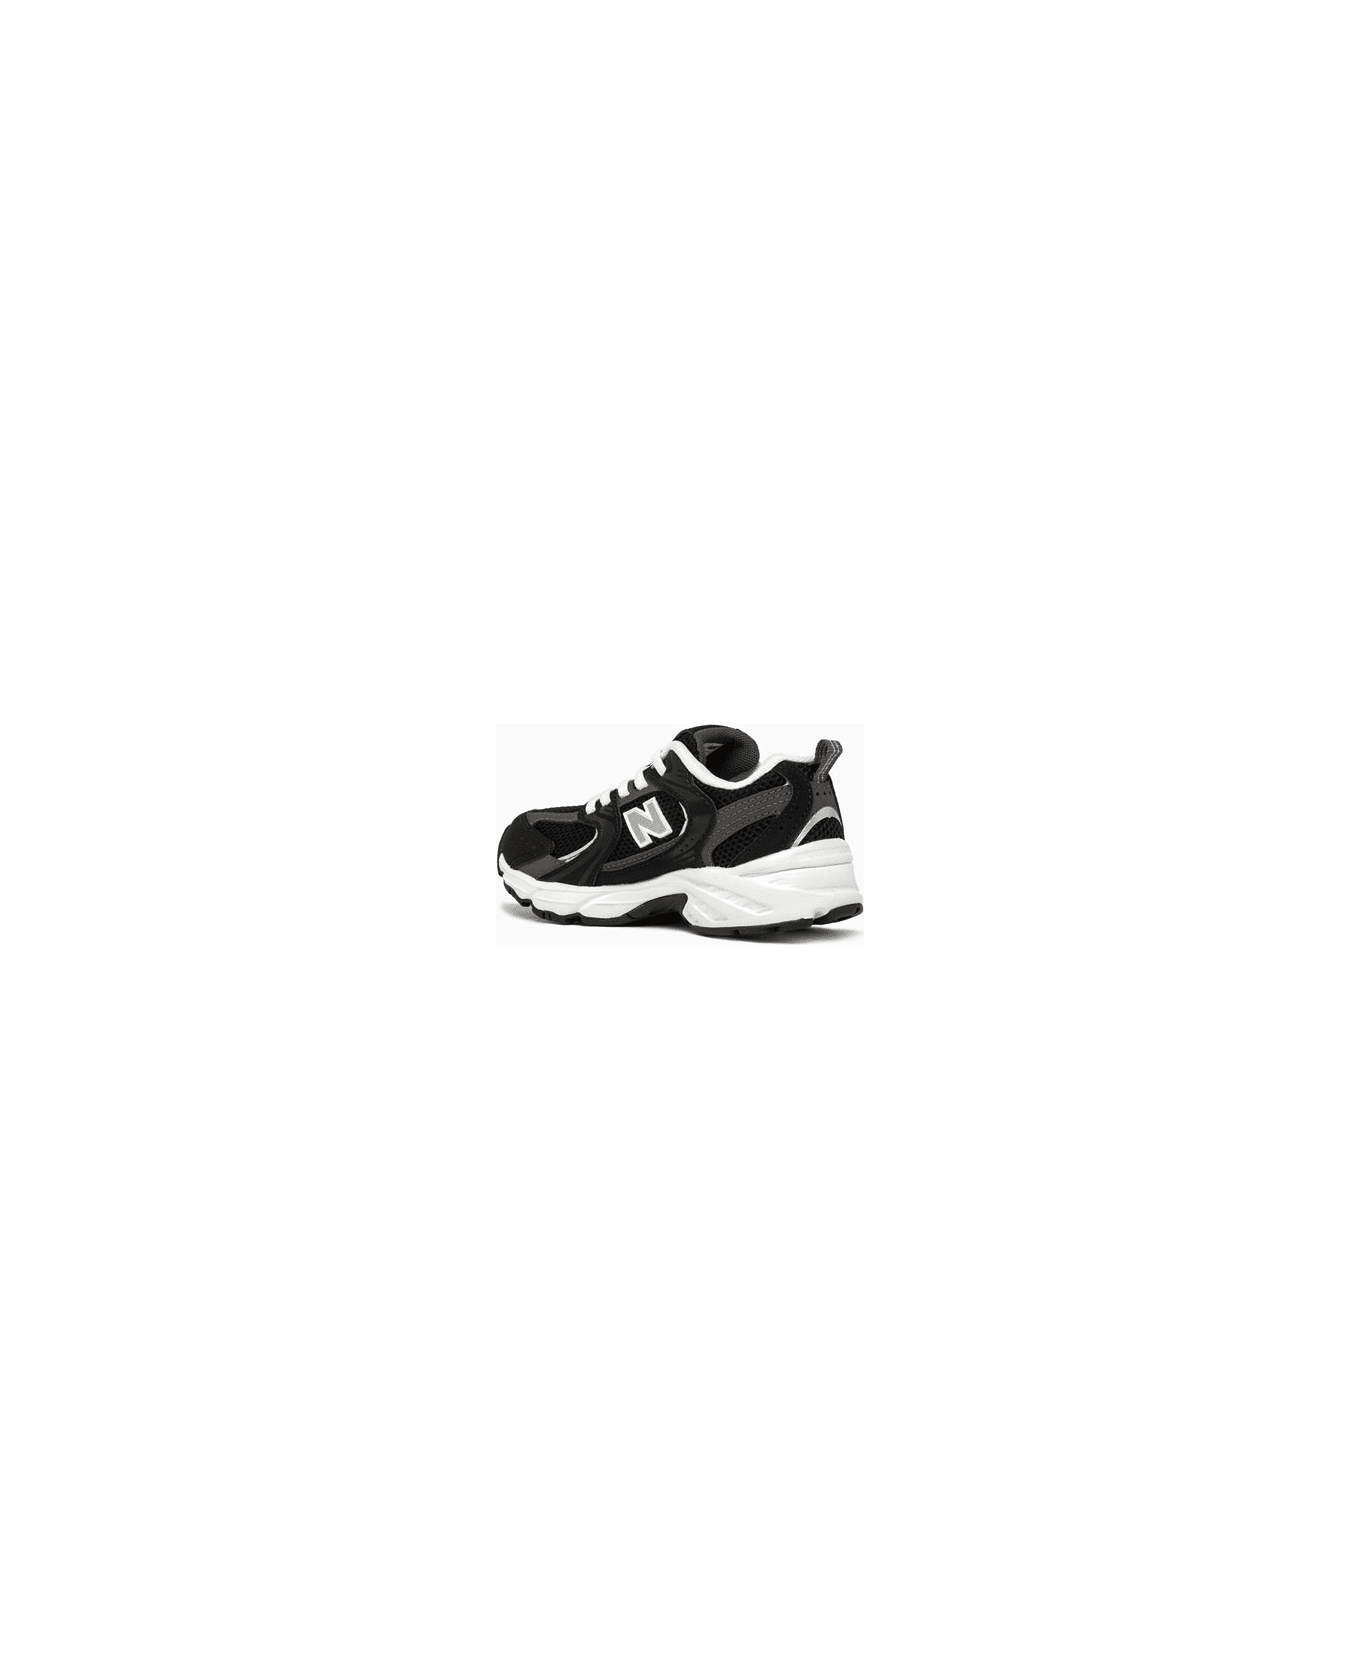 New Balance 530 Sneakers Pz530cc - BLACK